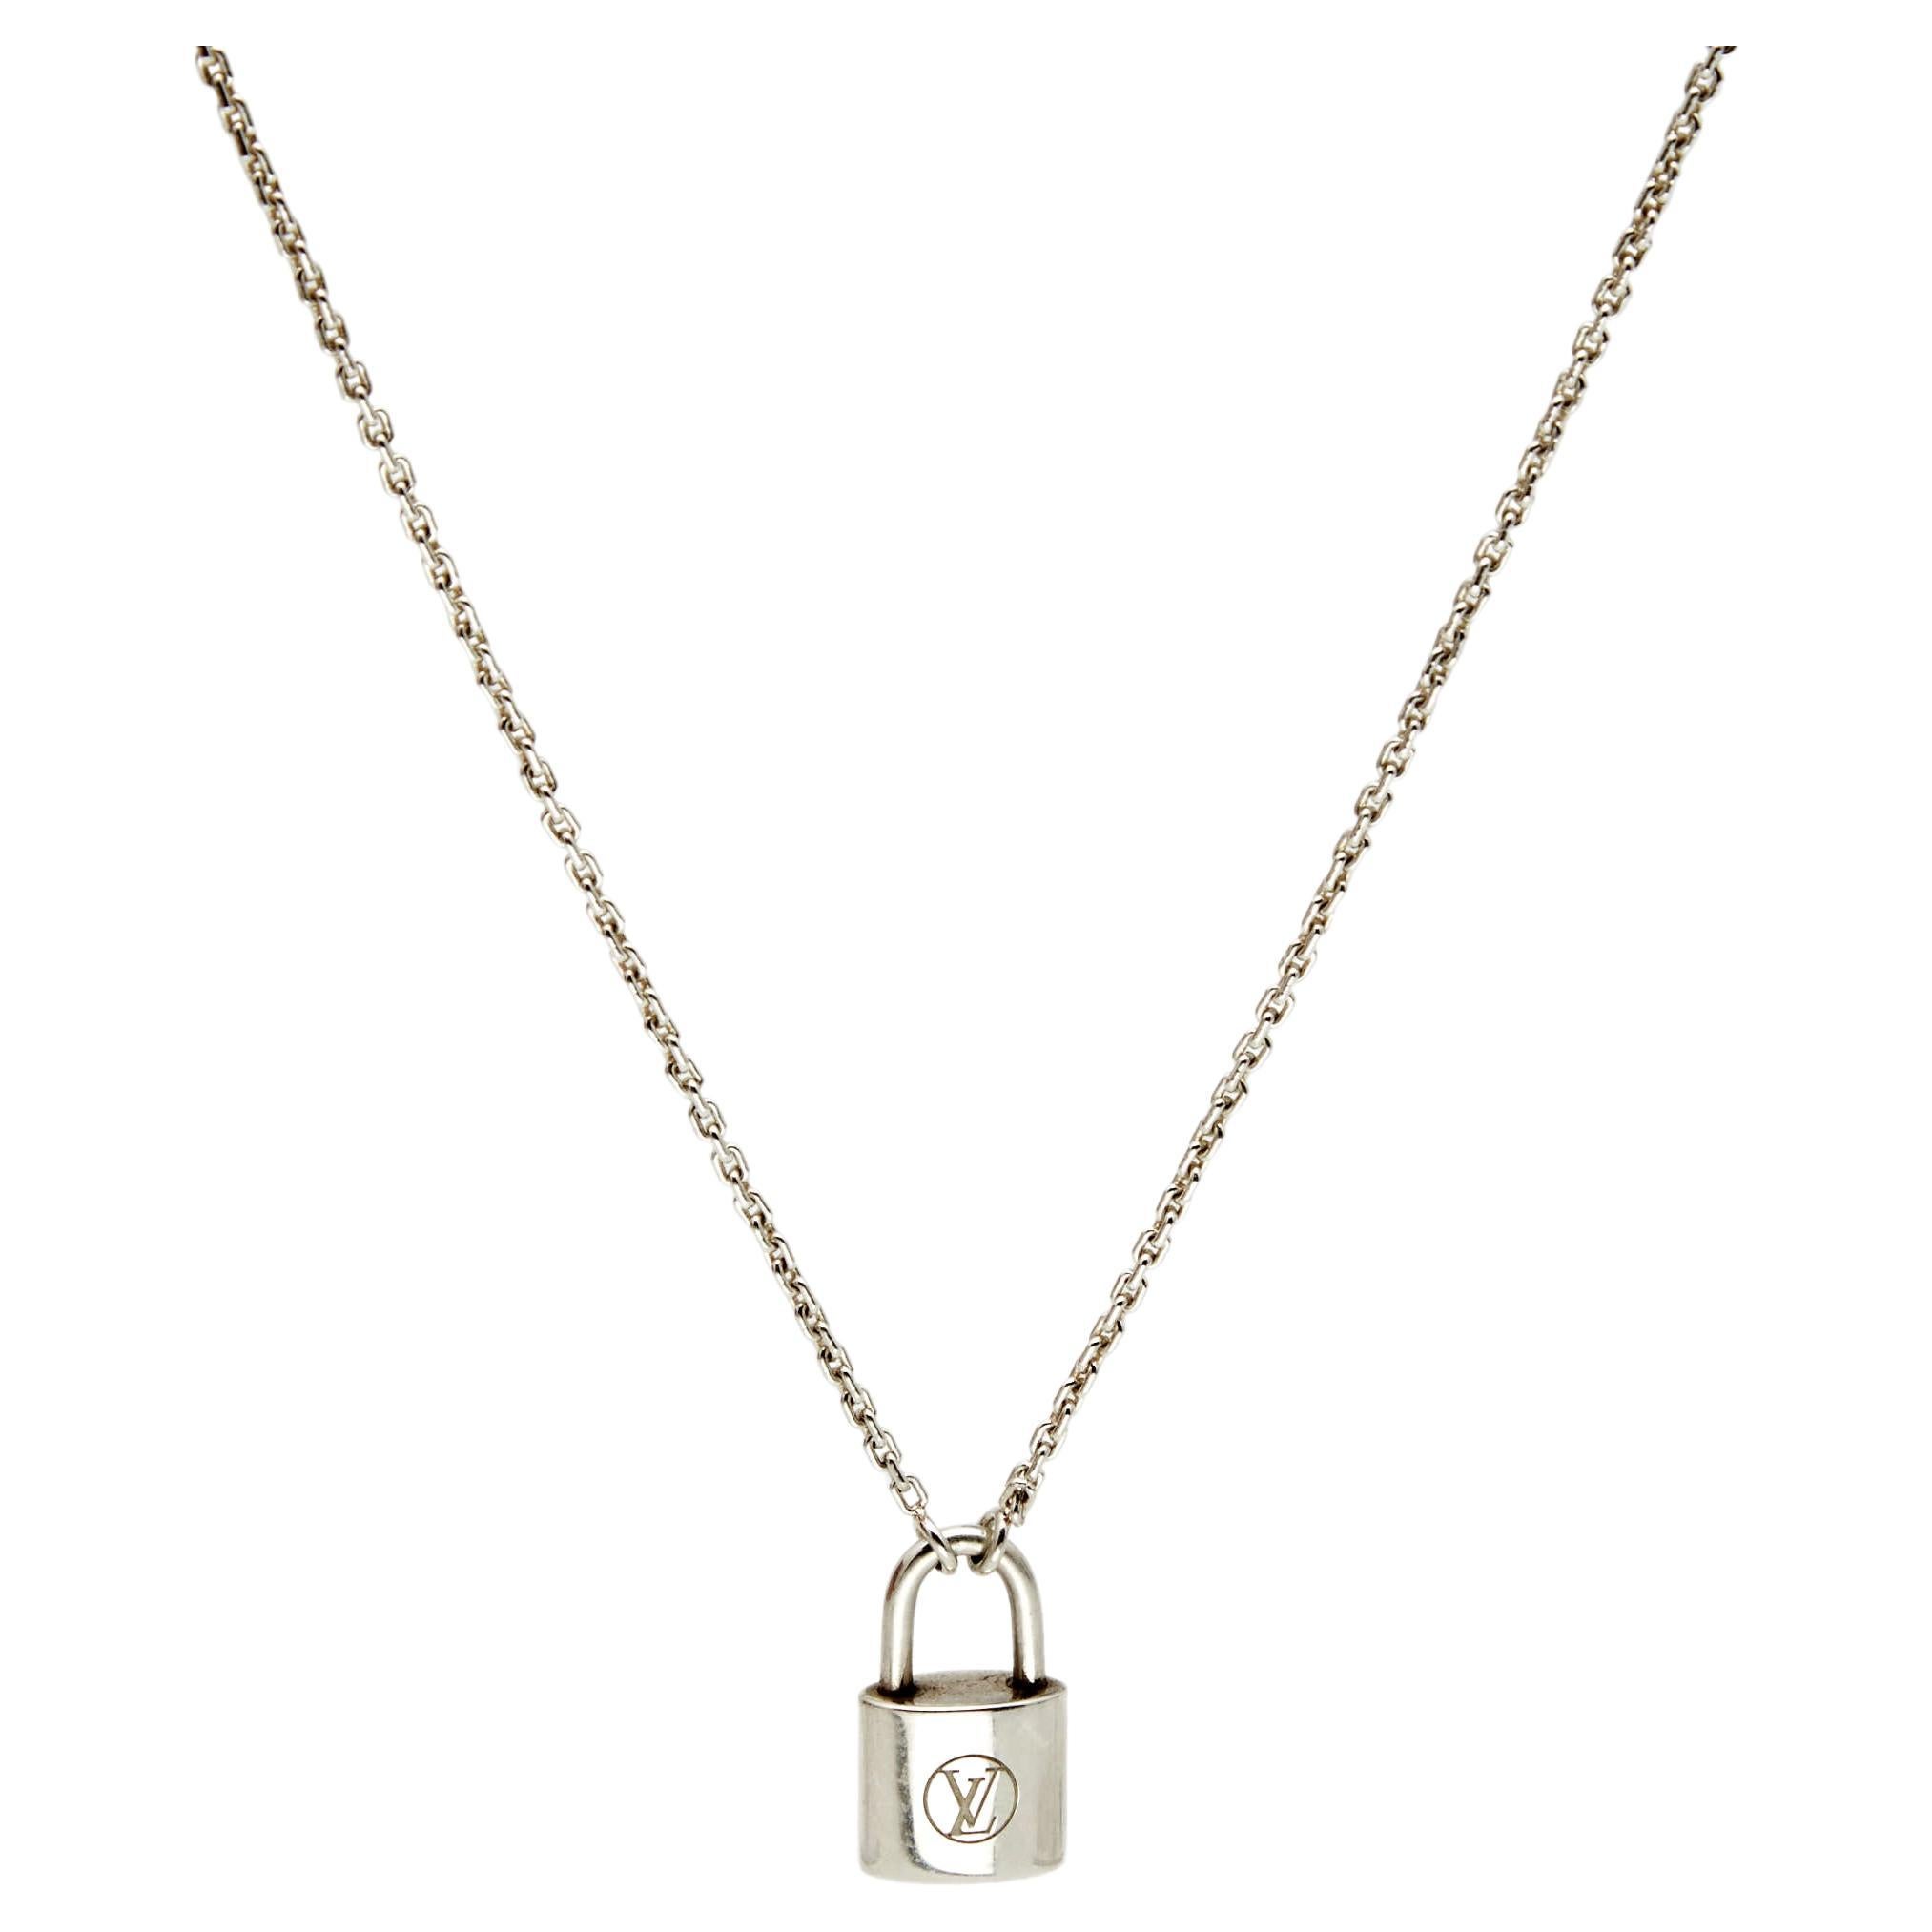 Louis Vuitton Lockit Sterling Silver Pendant Necklace